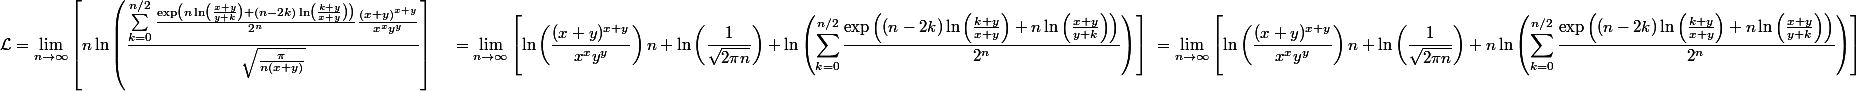 \begin{aligned} \mathcal{L} &= \lim_{n\rightarrow\infty} \left[n\ln\left(\frac{\sum_{k=0}^{n/2} \frac{\exp\left(n\ln\left(\frac{x+y}{y+k}\right) + (n-2k)\ln\left(\frac{k+y}{x+y}\right)\right)}{2^n}\frac{(x+y)^{x+y}}{x^xy^y}}{\sqrt{\frac{\pi}{n(x+y)}}}\right] \ &= \lim_{n\rightarrow\infty} \left[\ln\left(\frac{(x+y)^{x+y}}{x^xy^y}\right)n + \ln\left(\frac{1}{\sqrt{2\pi n}}\right) + \ln\left(\sum_{k=0}^{n/2} \frac{\exp\left((n-2k)\ln\left(\frac{k+y}{x+y}\right) + n\ln\left(\frac{x+y}{y+k}\right)\right)}{2^n}\right)\right] \ &= \lim_{n\rightarrow\infty} \left[\ln\left(\frac{(x+y)^{x+y}}{x^xy^y}\right)n + \ln\left(\frac{1}{\sqrt{2\pi n}}\right) + n \ln\left(\sum_{k=0}^{n/2} \frac{\exp\left((n-2k)\ln\left(\frac{k+y}{x+y}\right) + n\ln\left(\frac{x+y}{y+k}\right)\right)}{2^n}\right)\right] \end{aligned}